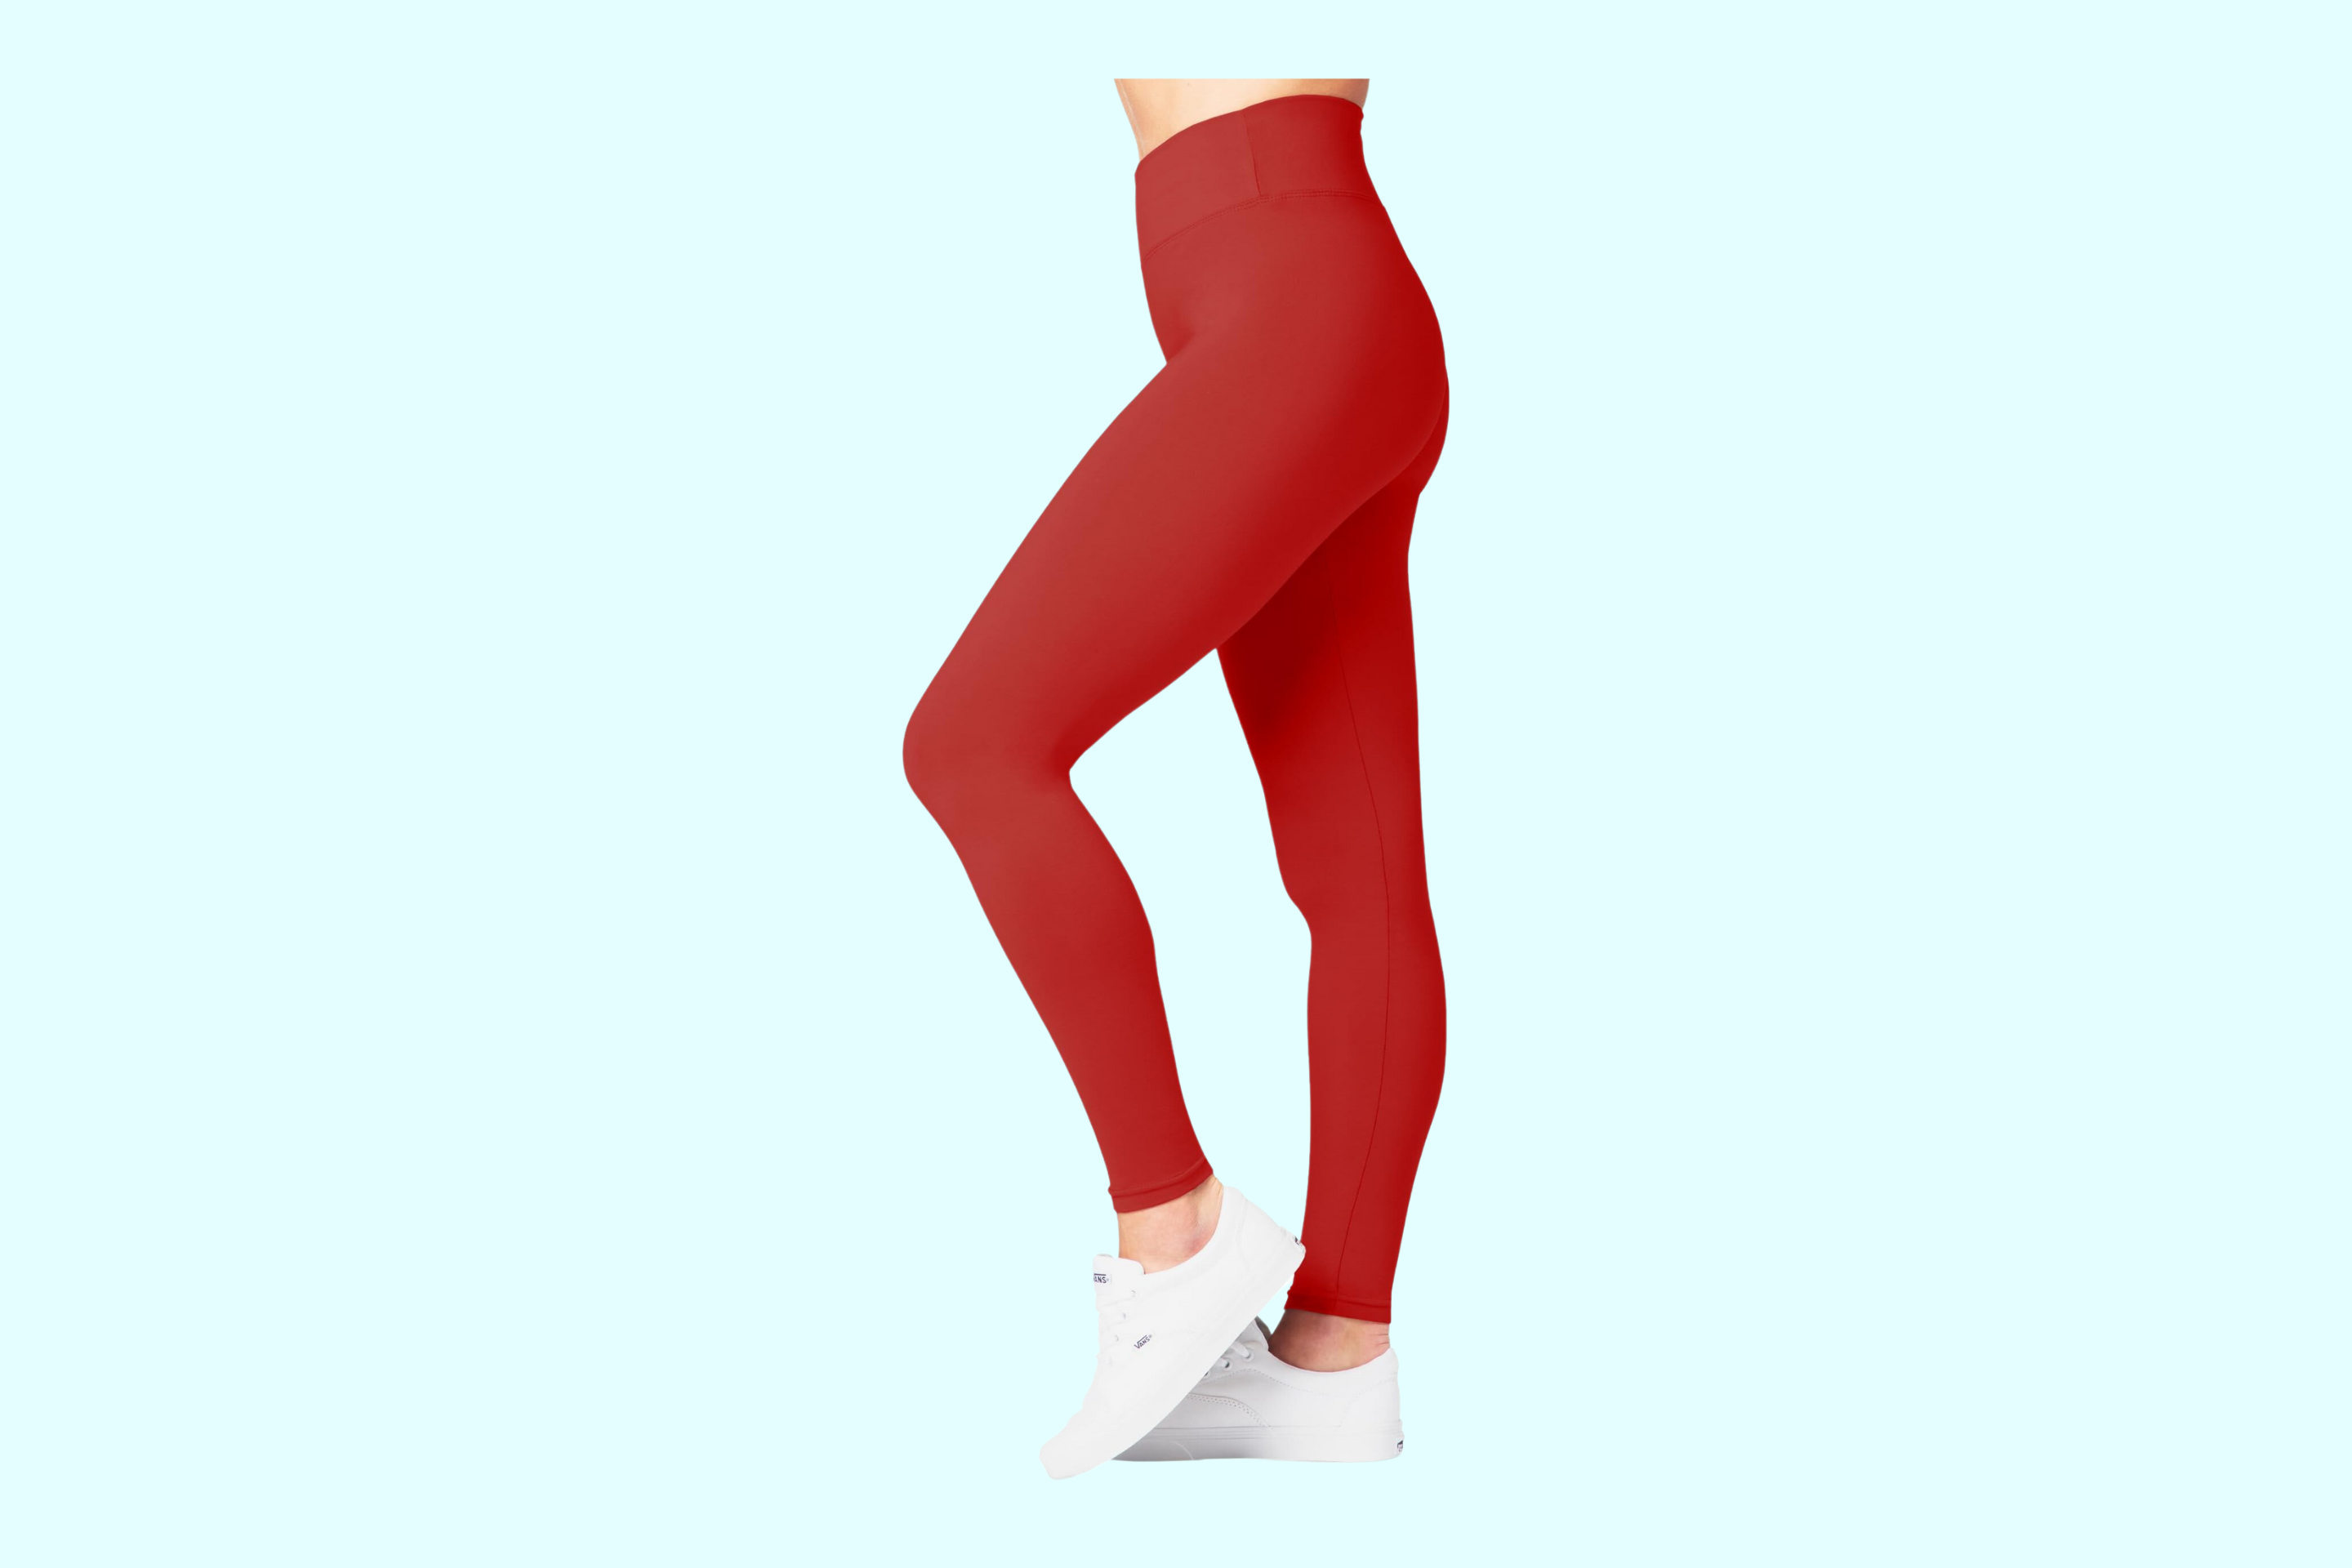 Yogaworld Yoga Leggings Under Shorts For Women And Girls Tight